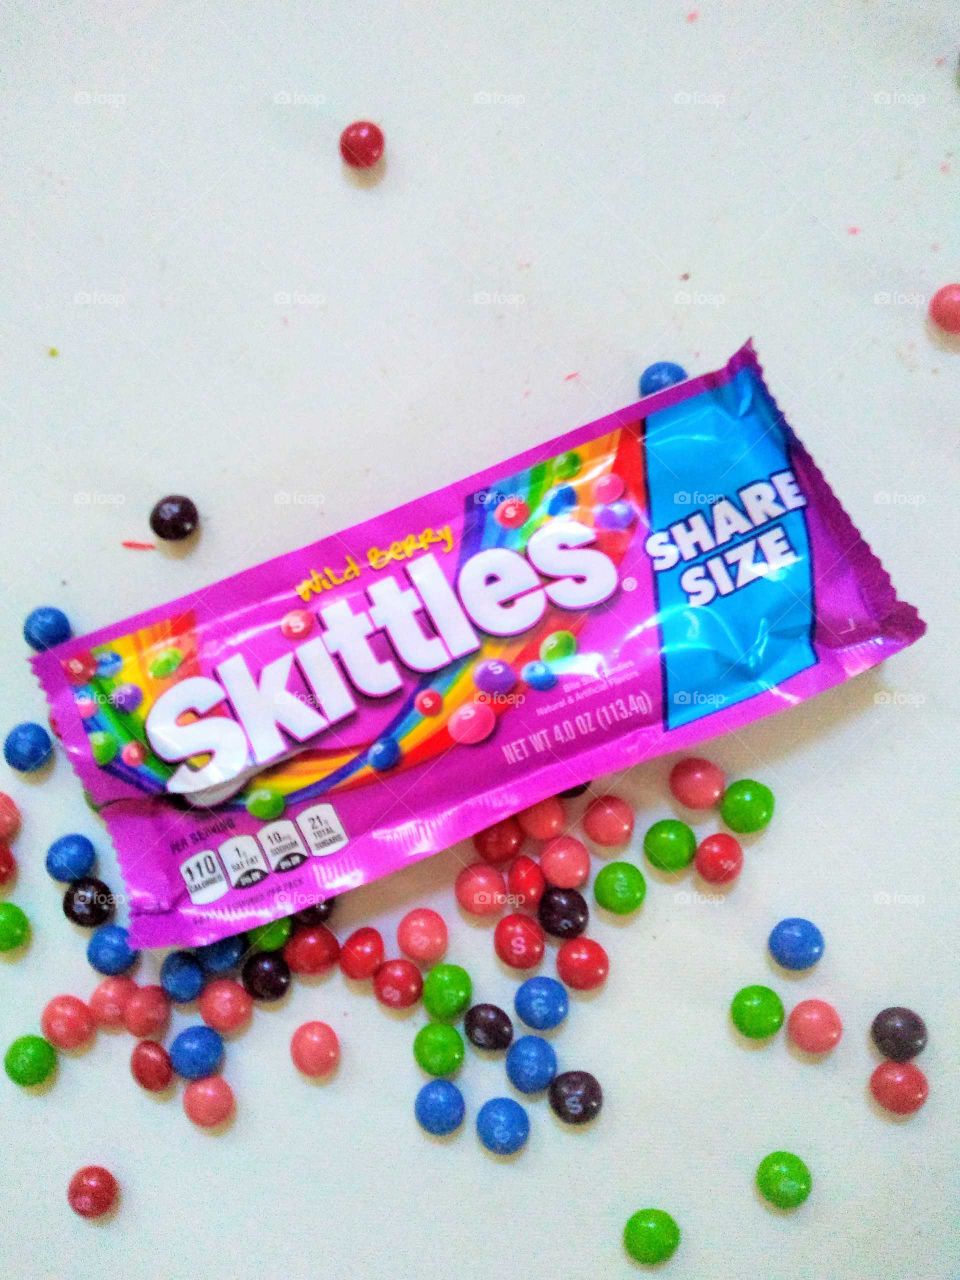 Candy heaven 😀